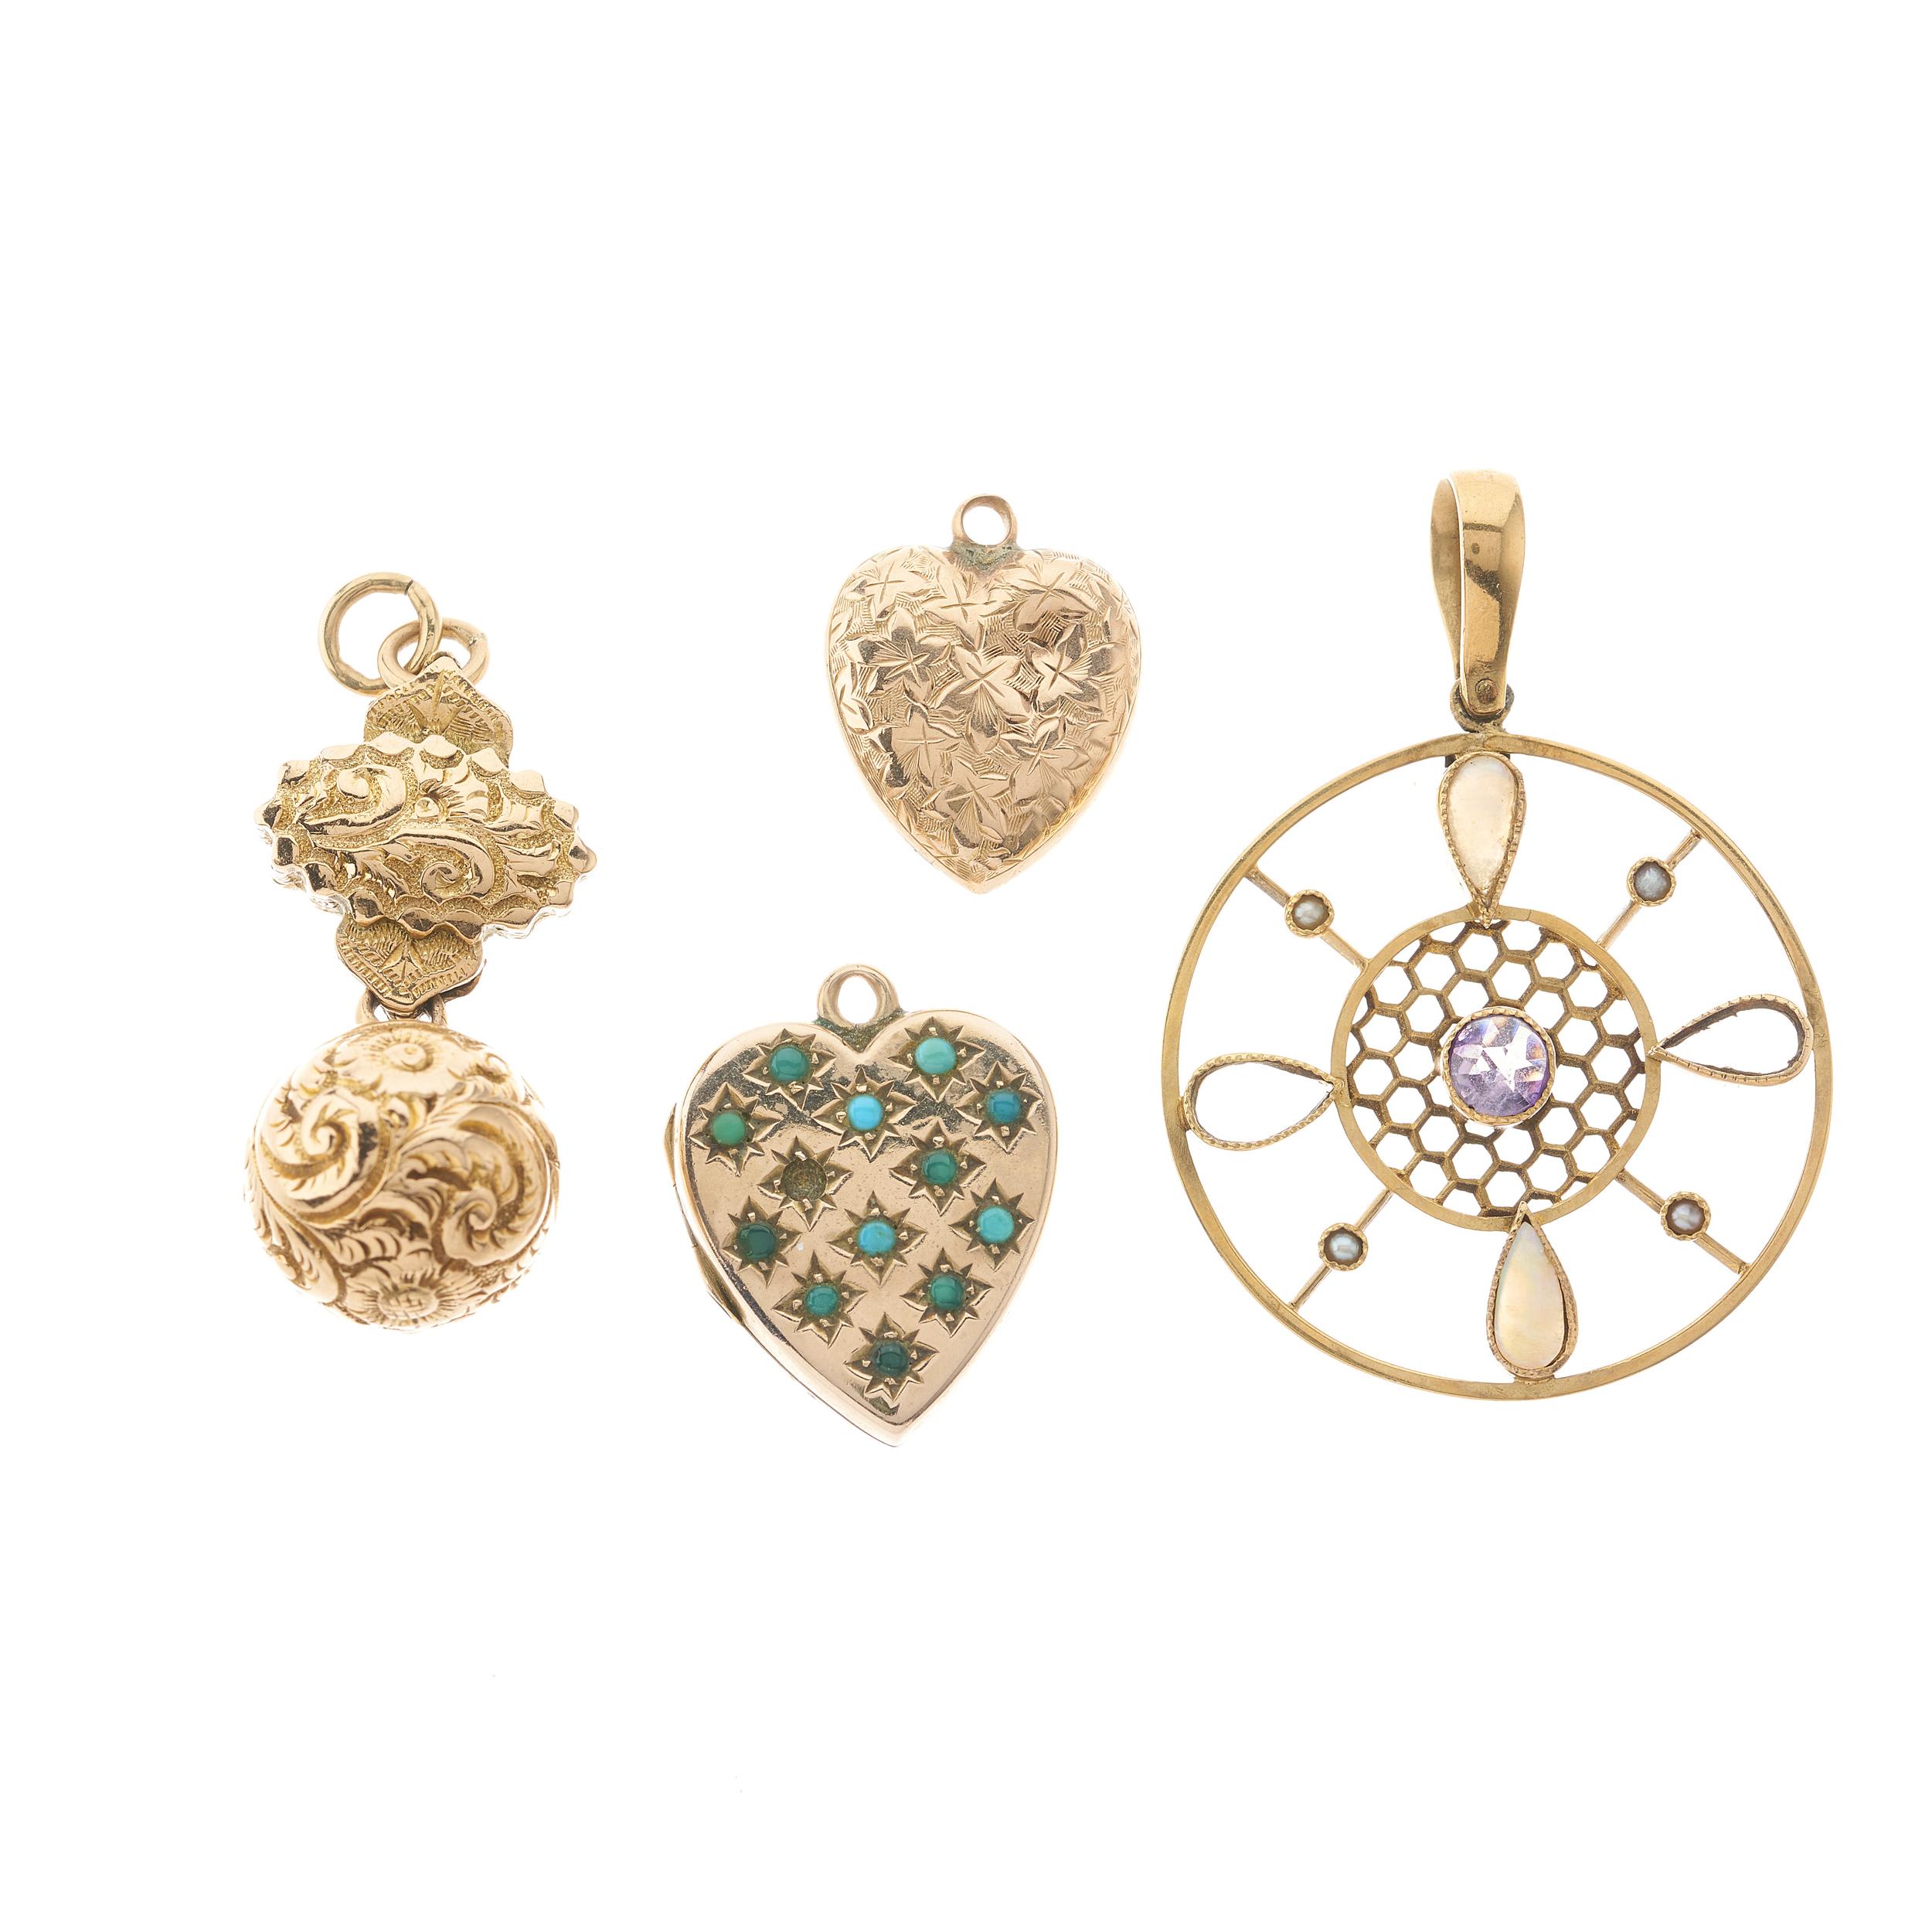 Four early 20th century gold gem-set pendants